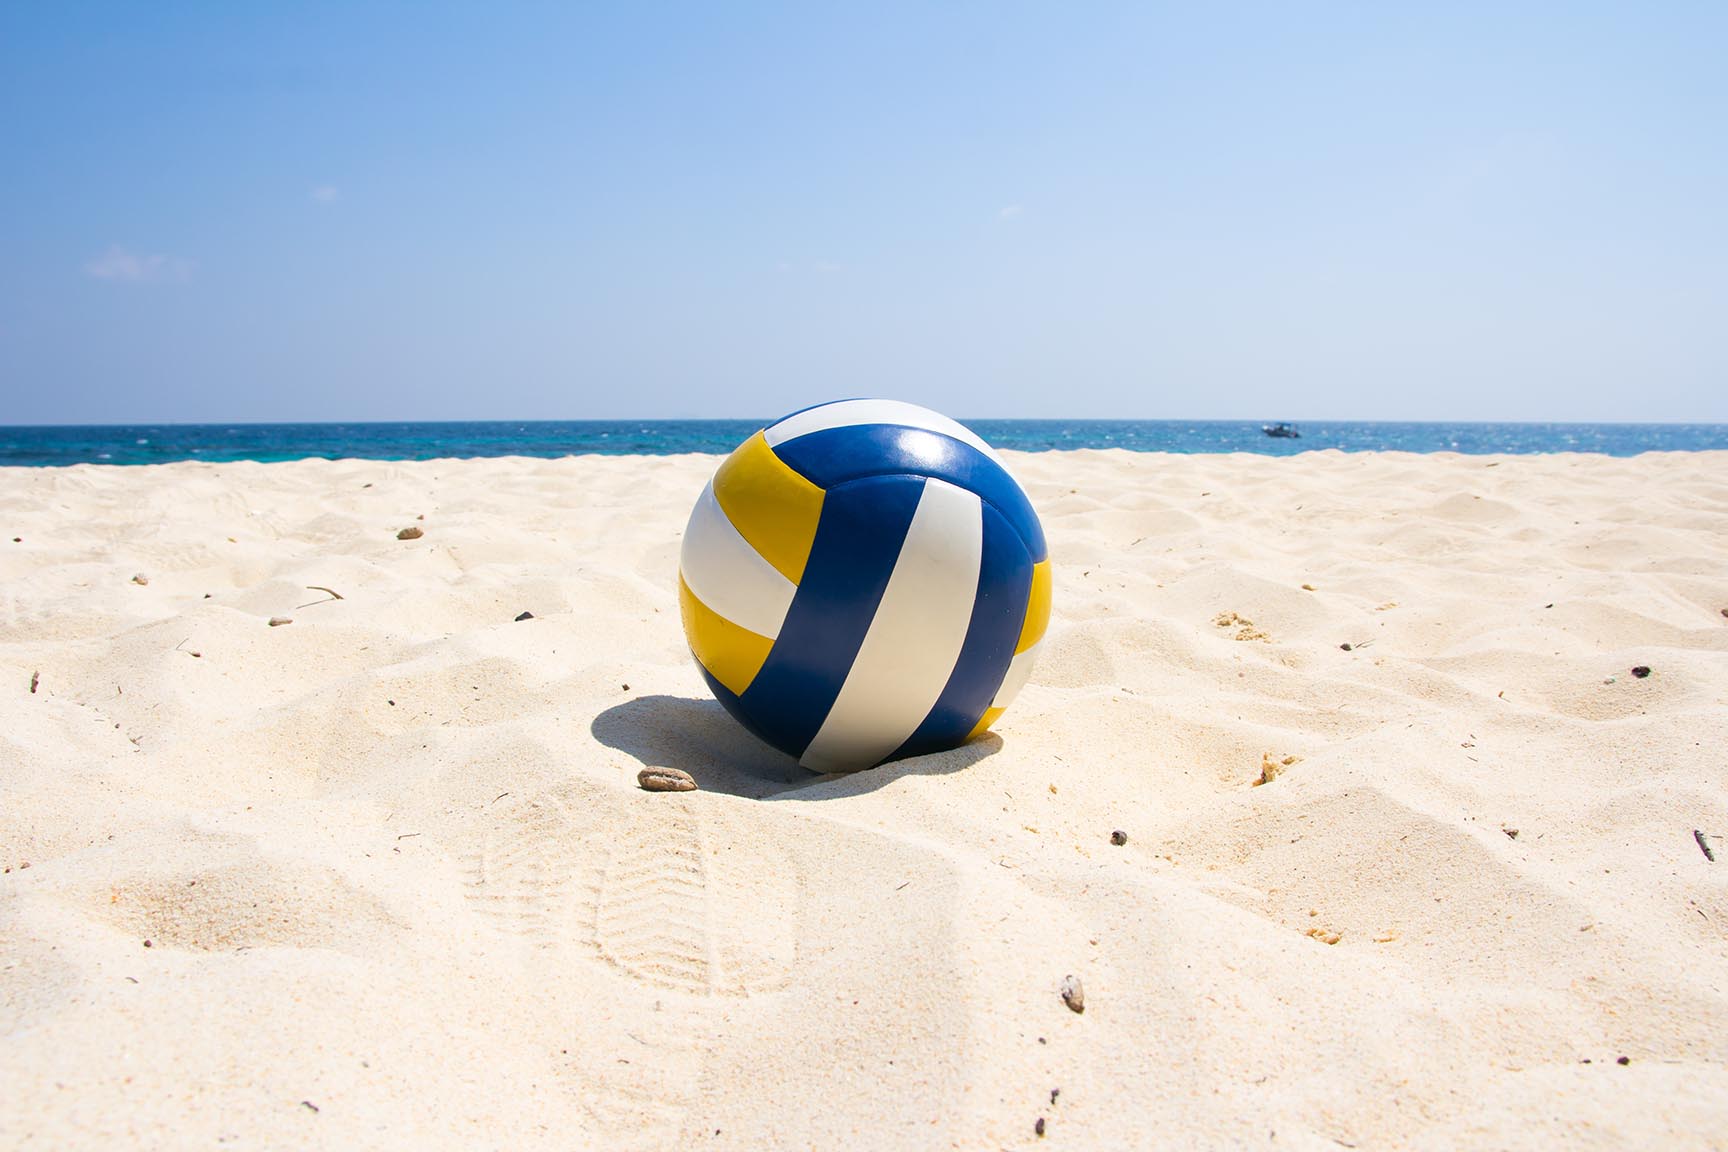 Torneo de voleibol de playa – 17:30 horas.